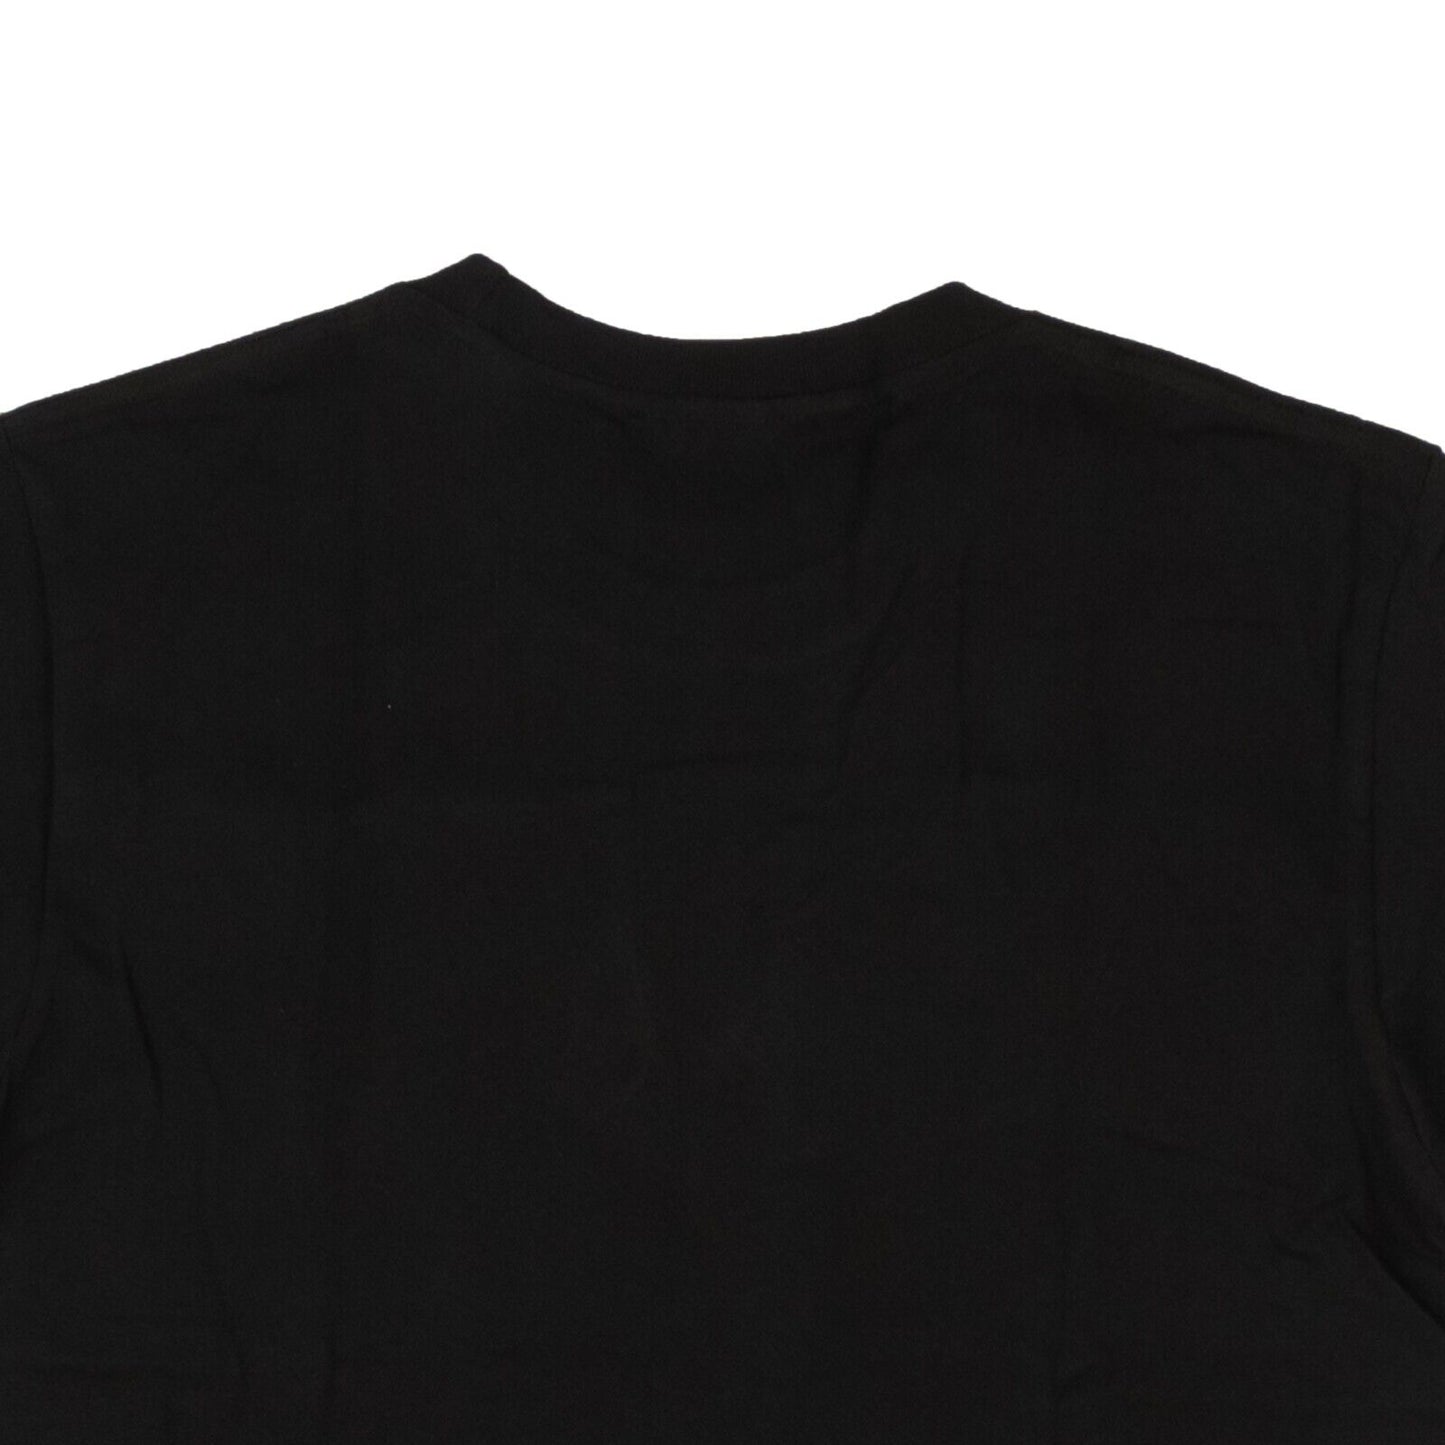 Bape Black Cotton Ape Short Sleeve T-Shirt - Black